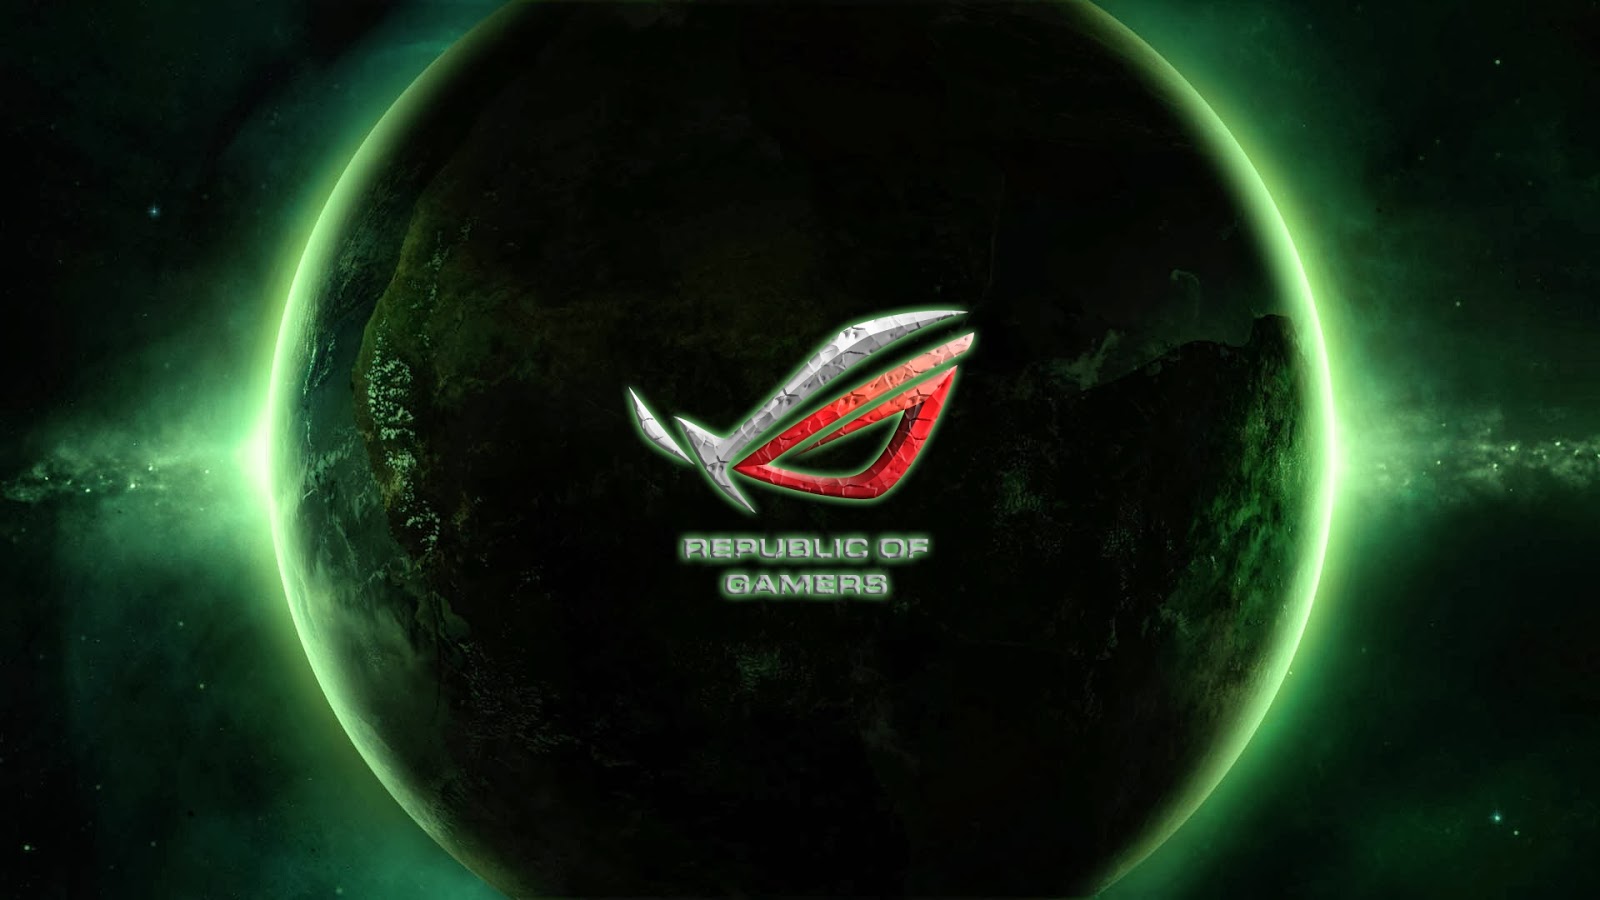 Republic Of Gamers Logo Brand Space Pla Widescreen HD Wallpaper I09